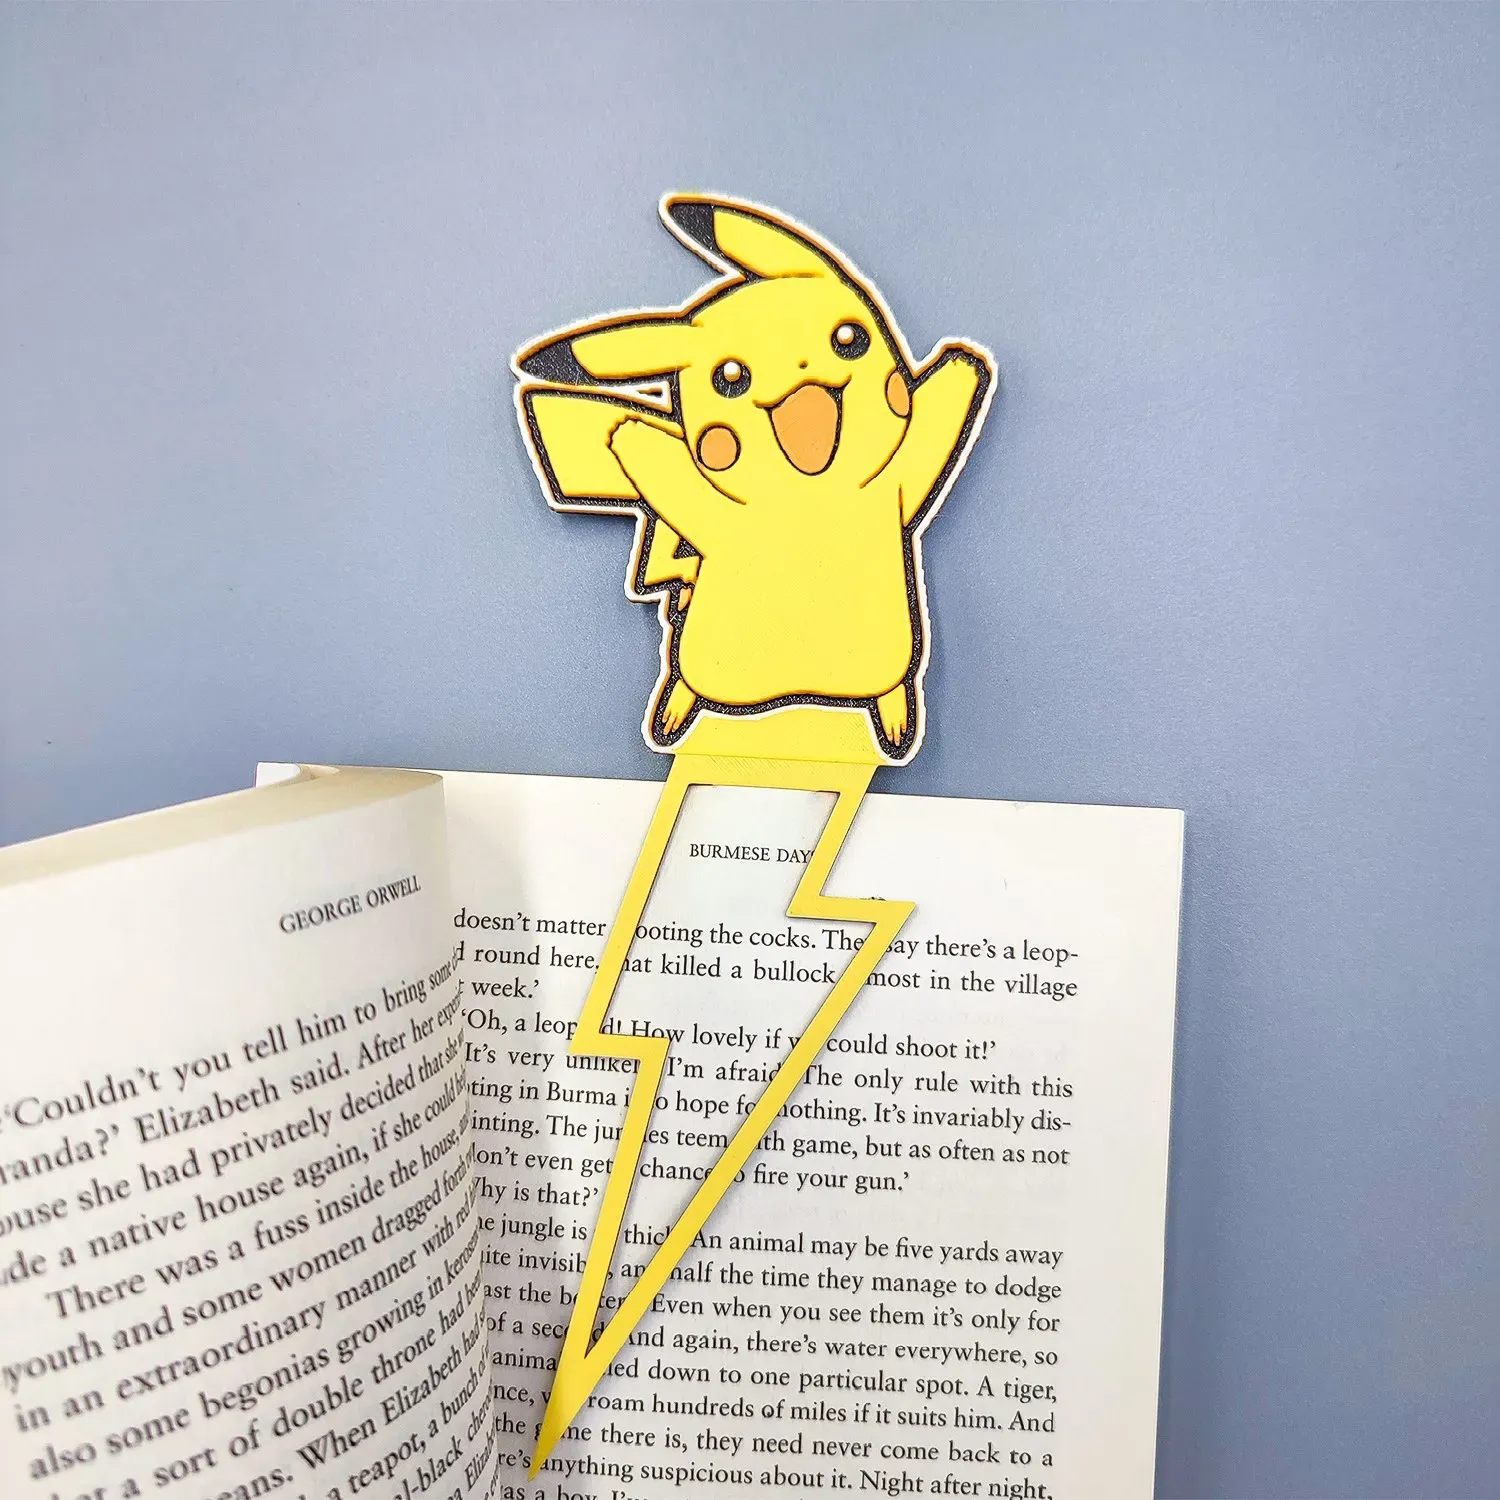 Pikachu Bookmark